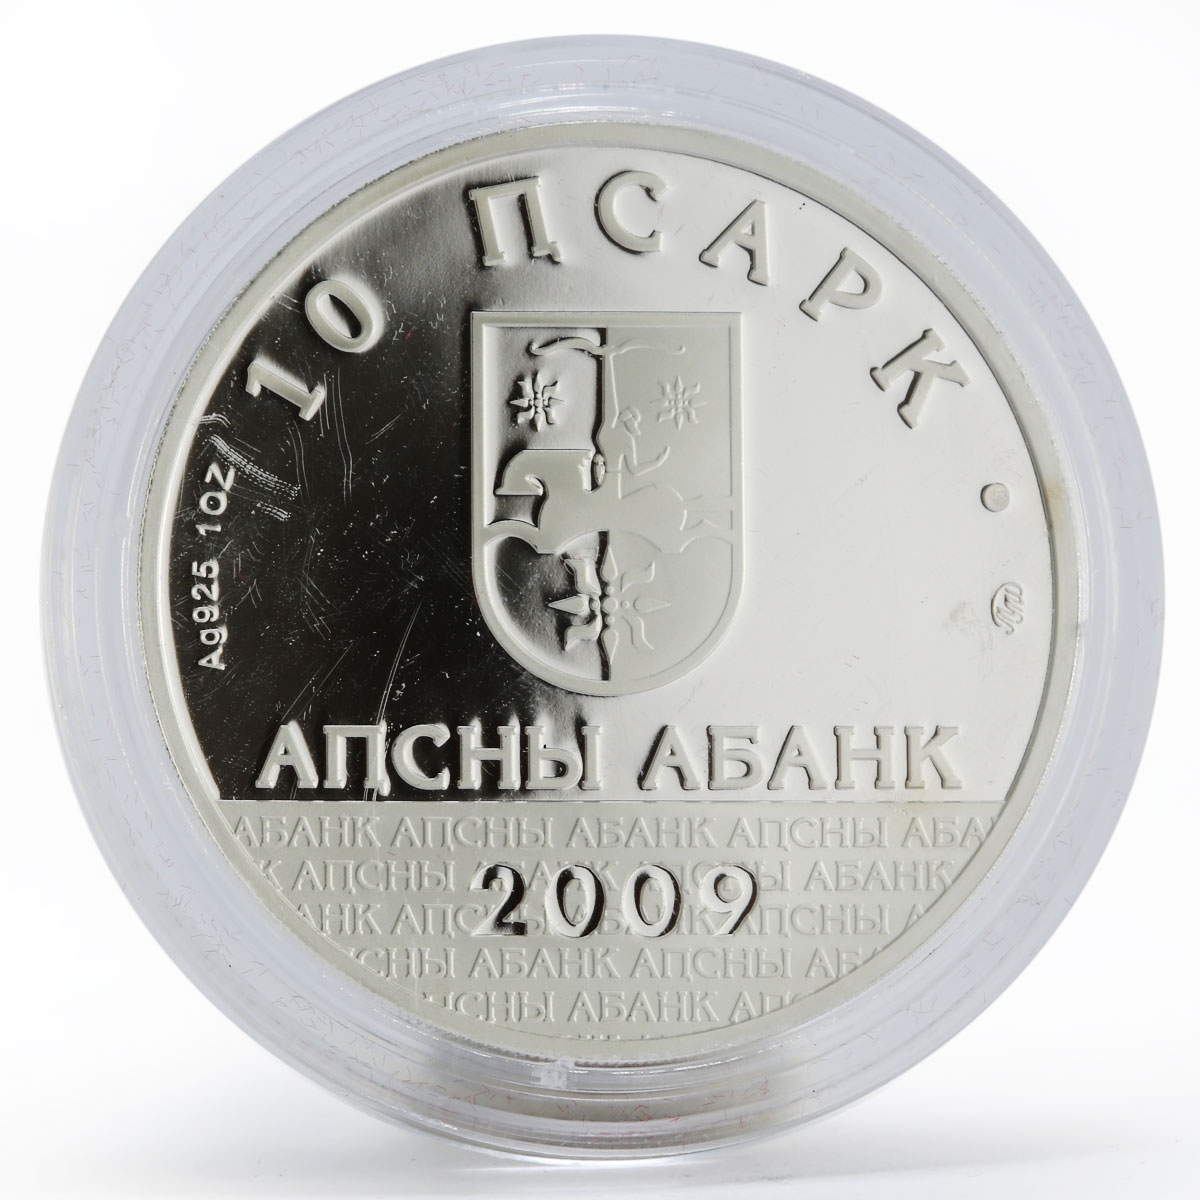 Abkhazia 10 apsars Dmitry Gulia author poet proof-like silver coin 2009